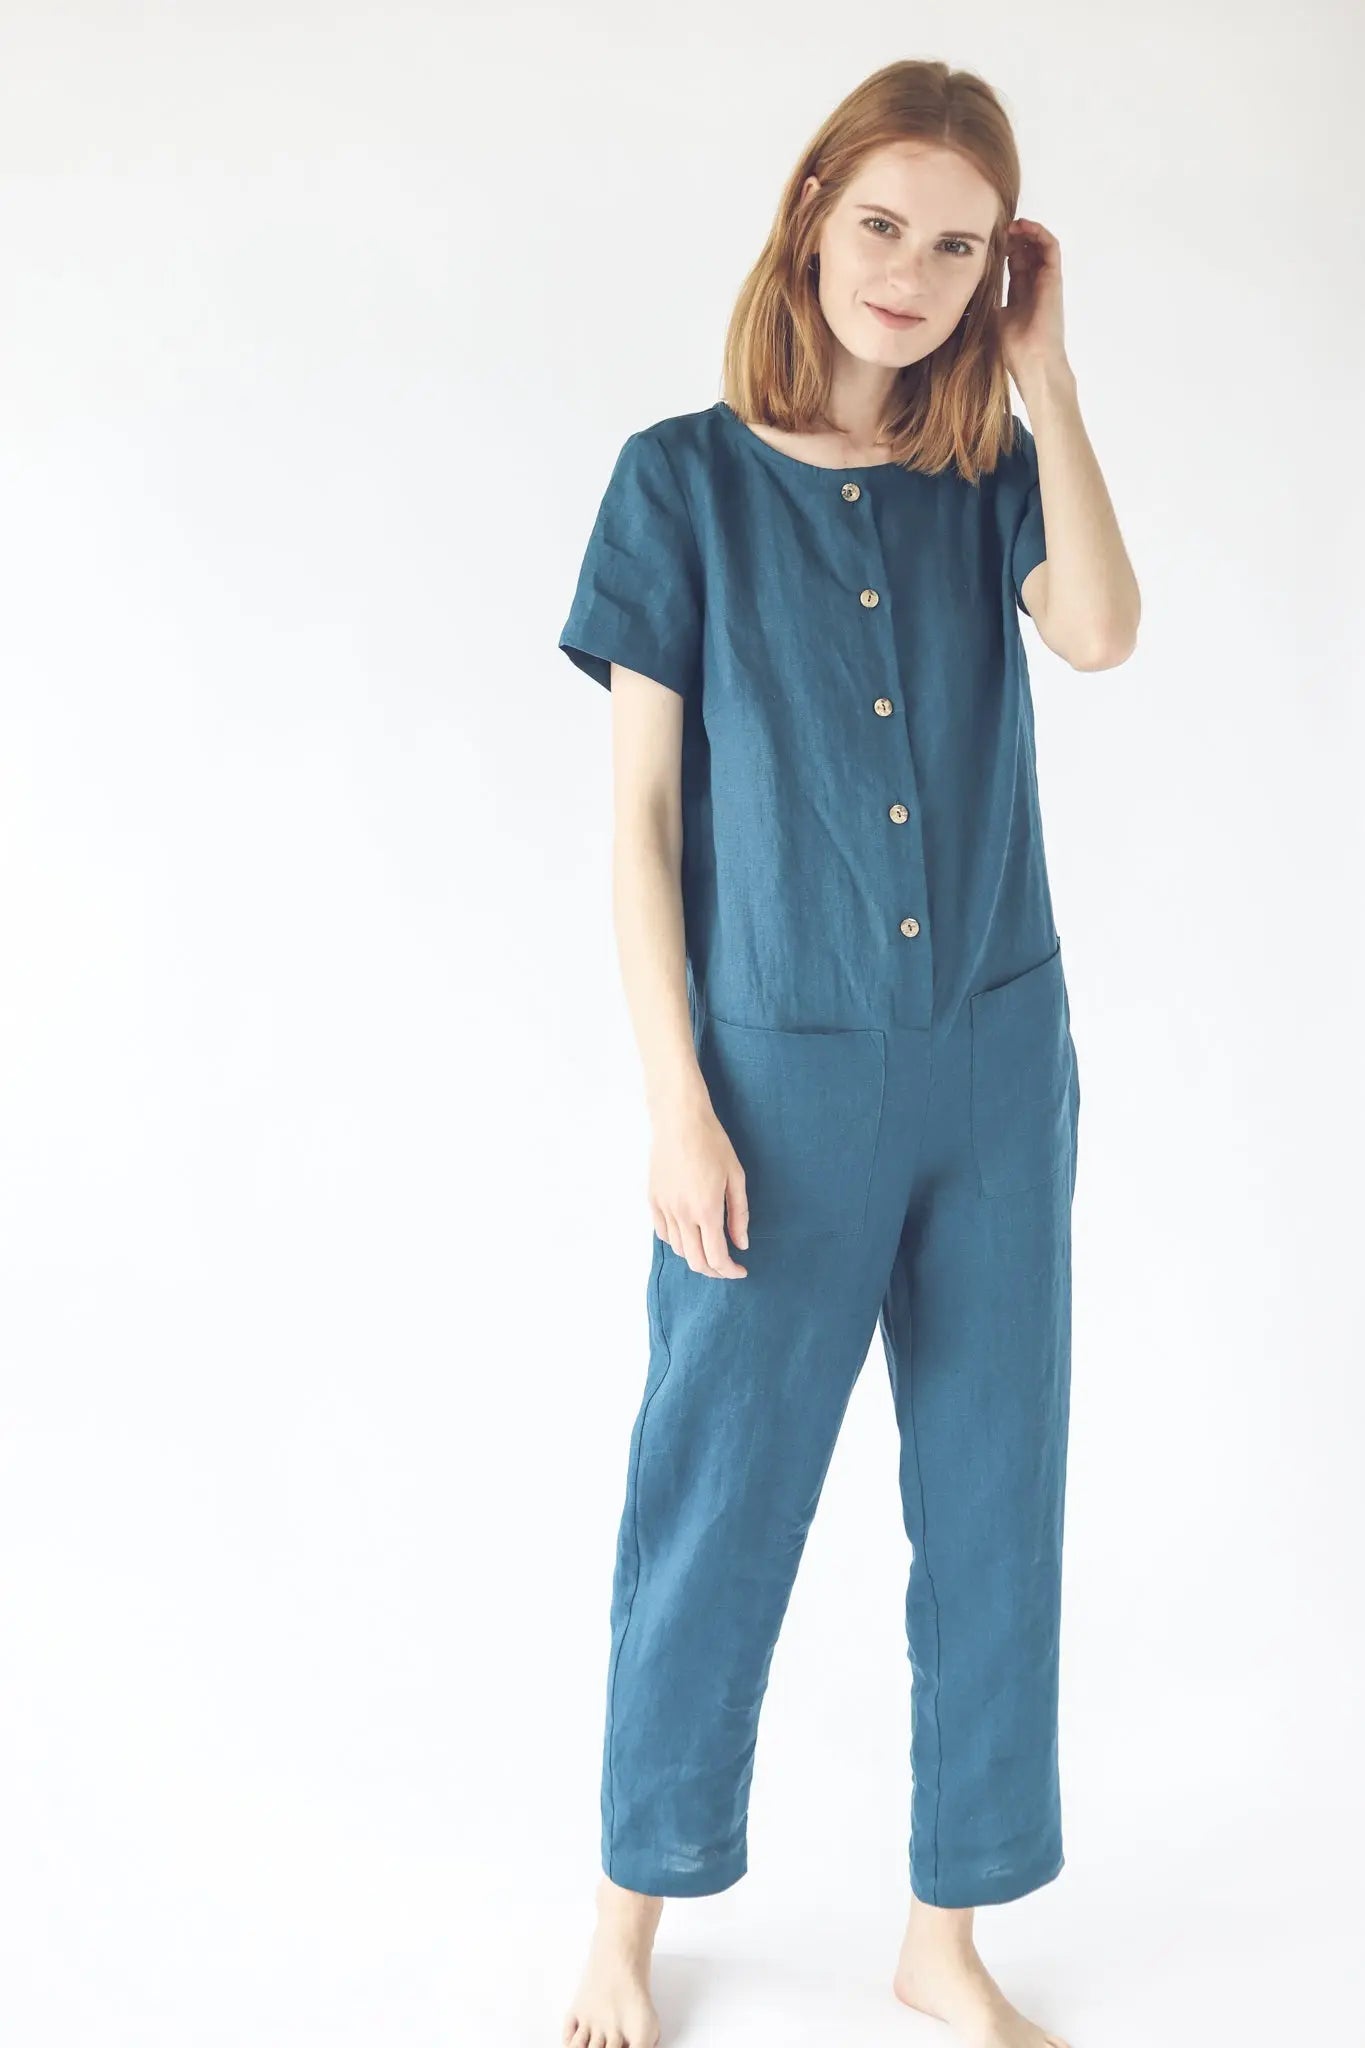 Linen Jumpsuit With front pockets - Epic Linen luxury linen